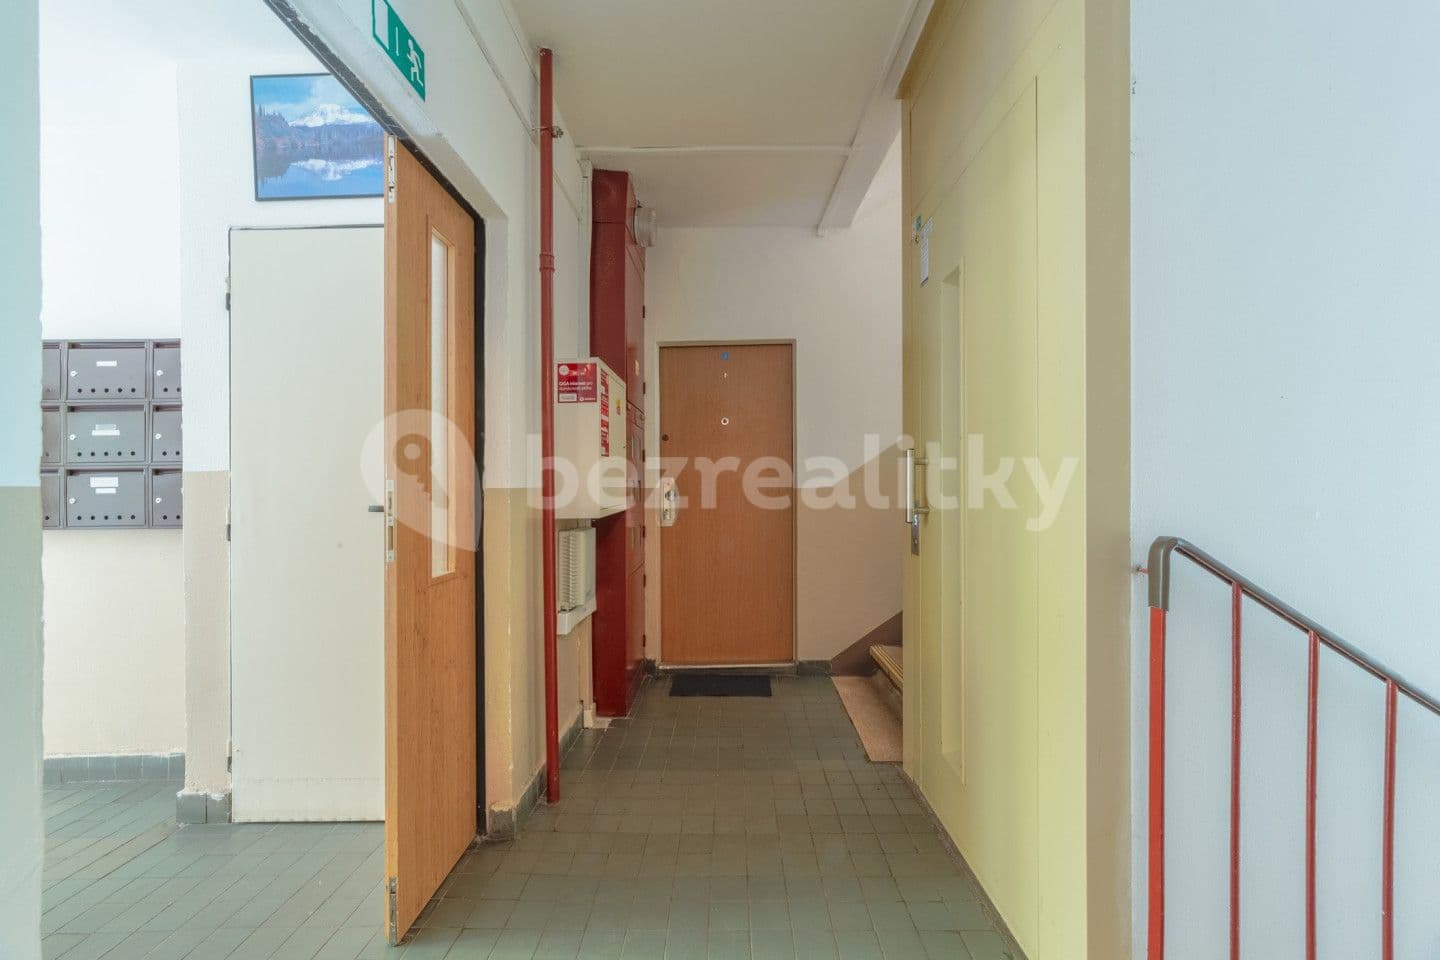 1 bedroom flat for sale, 44 m², Jezdecká, Děčín, Ústecký Region